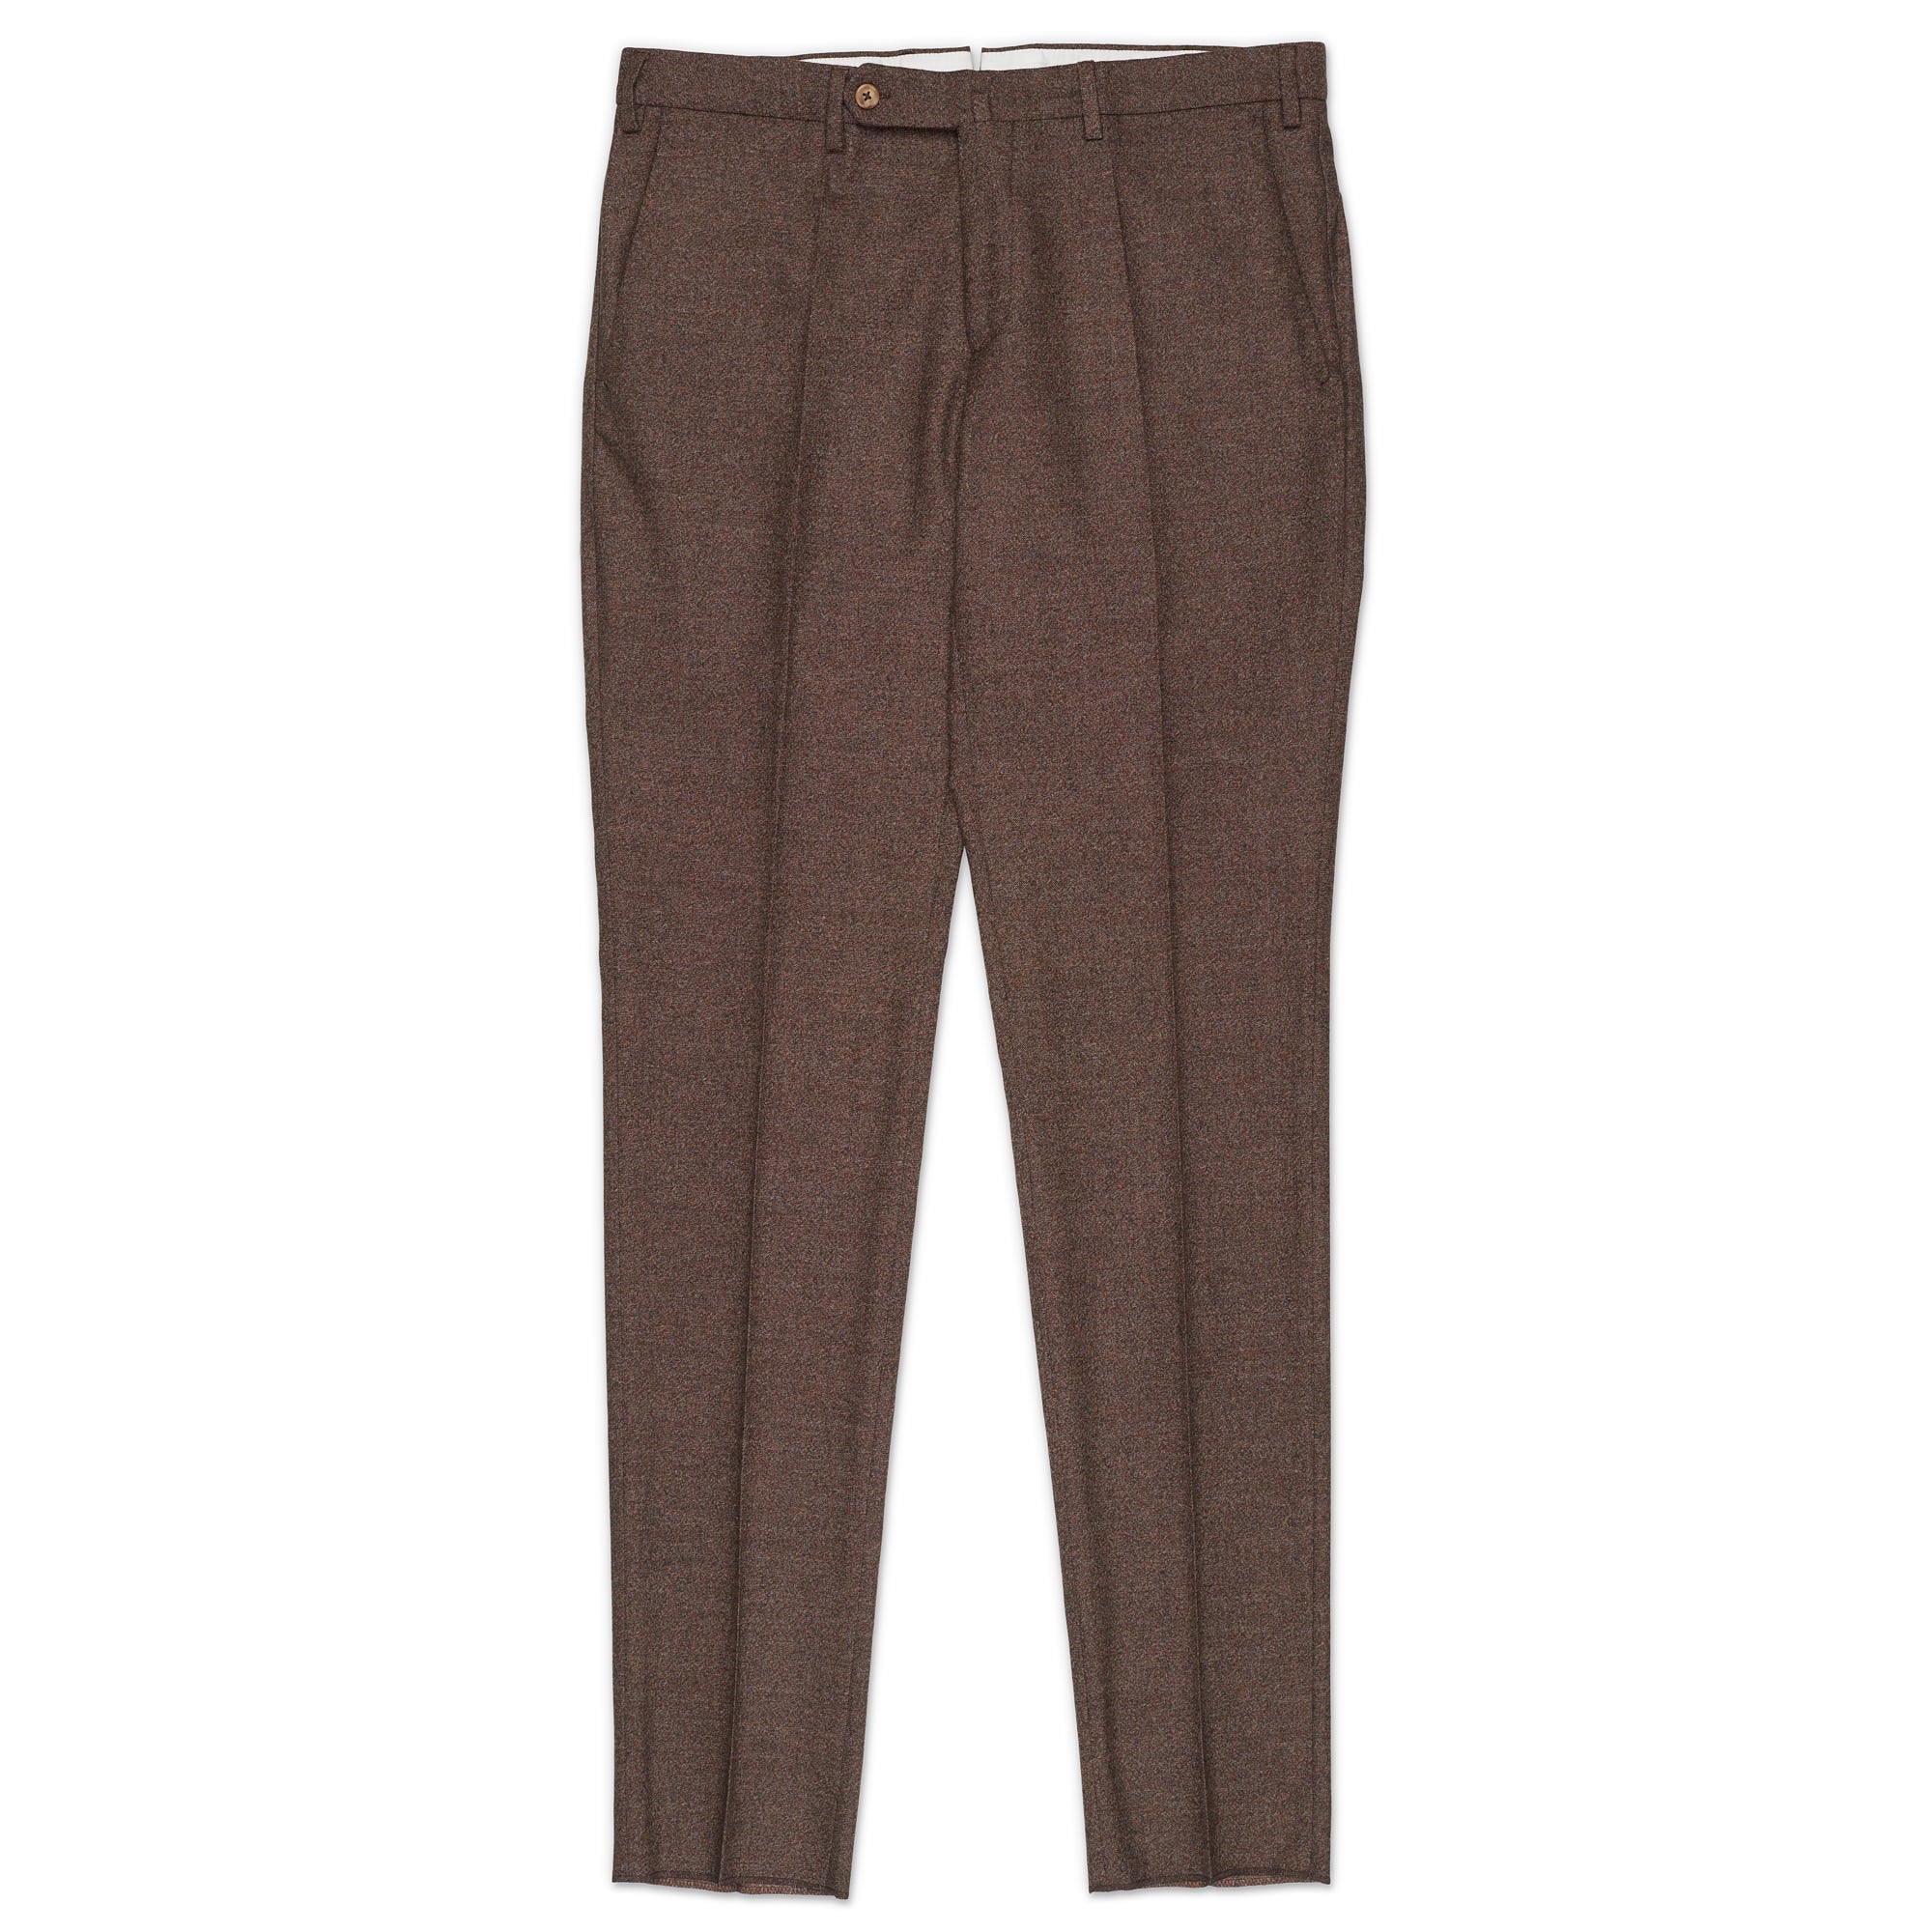 INCOTEX (Slowear) Brown Donegal Virgin Wool Flat Front Dress Pants NEW Slim Fit INCOTEX